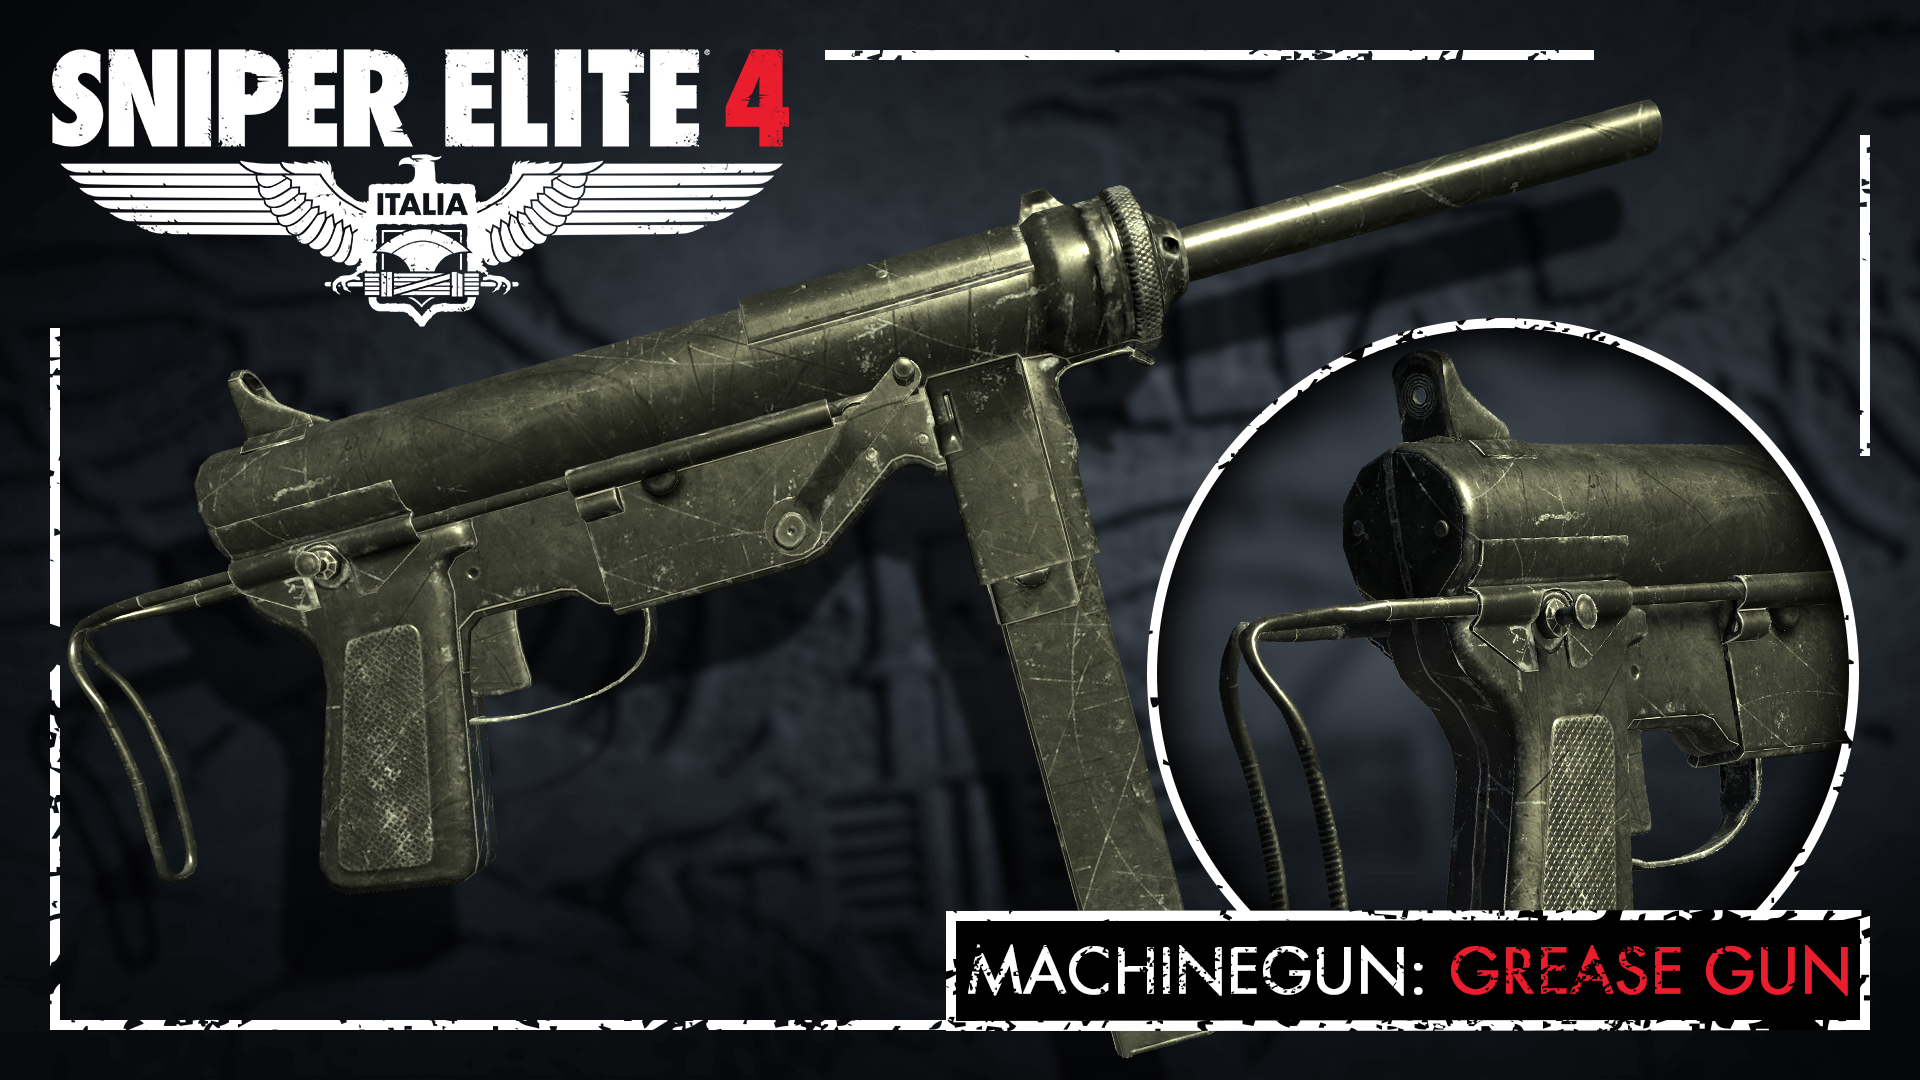 Sniper Elite 4 - Silent Warfare Weapons Pack DLC Steam CD Key 4.51 $